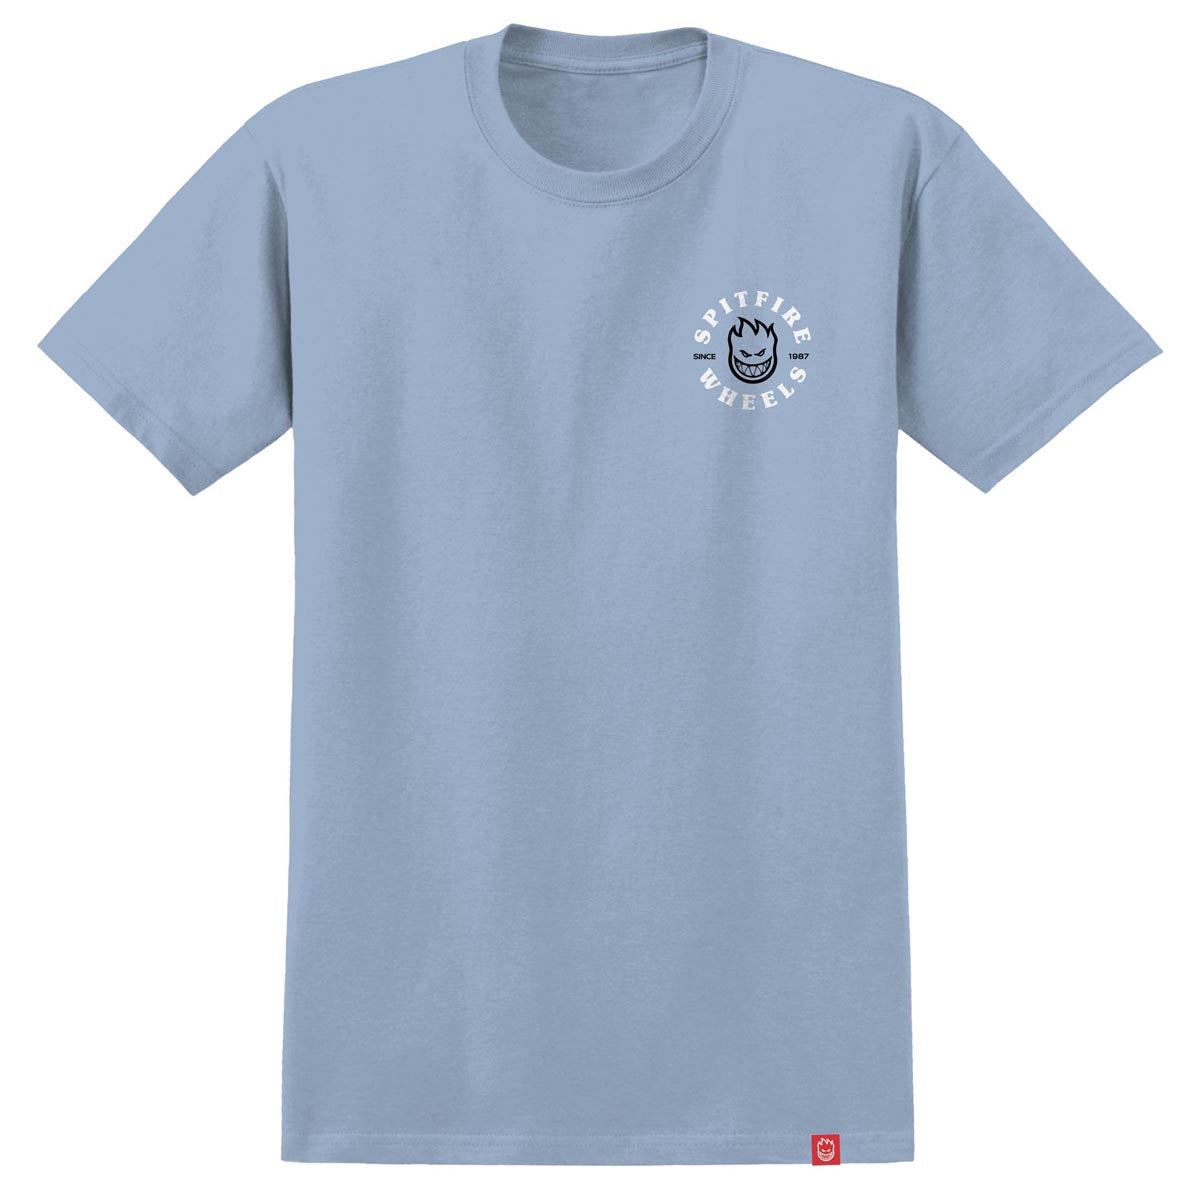 Spitfire Bighead Classic T-Shirt - Light Blue/Black/White image 1